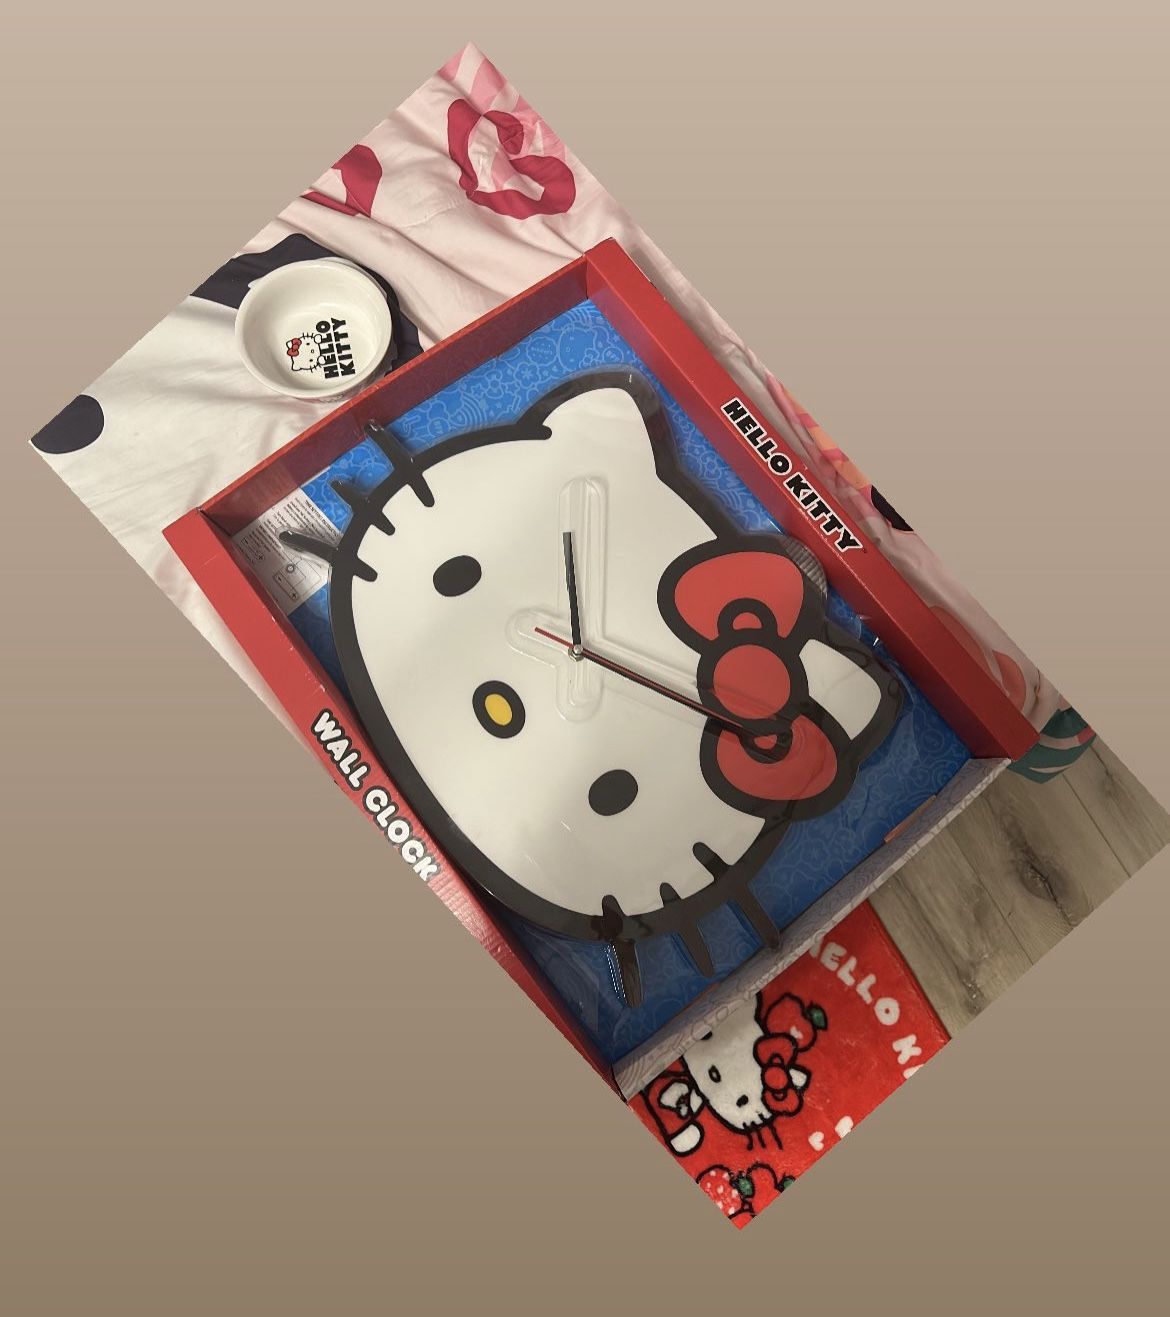 Hello Kitty Clock 